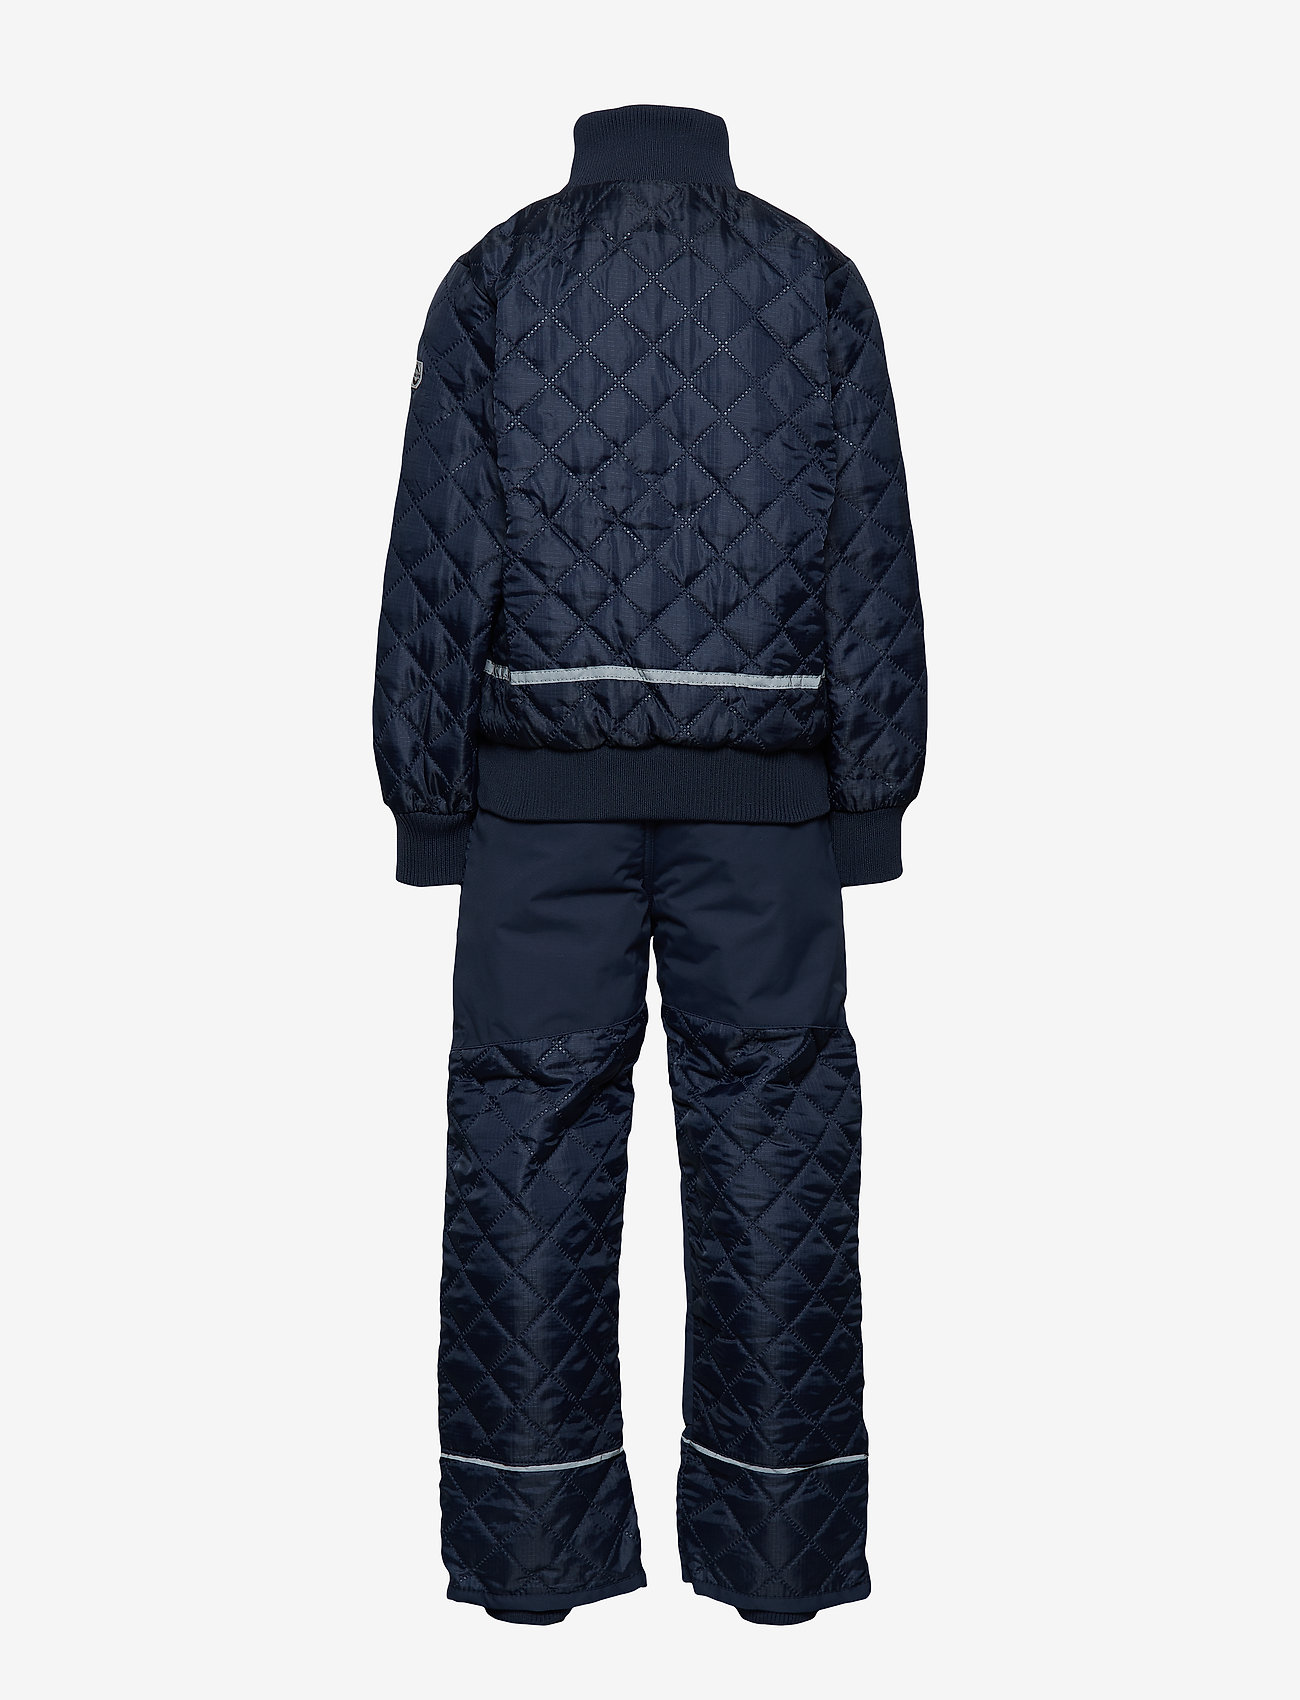 Mikk-Line - Termo set w. fleece in jacket - 286/dark marine - 1